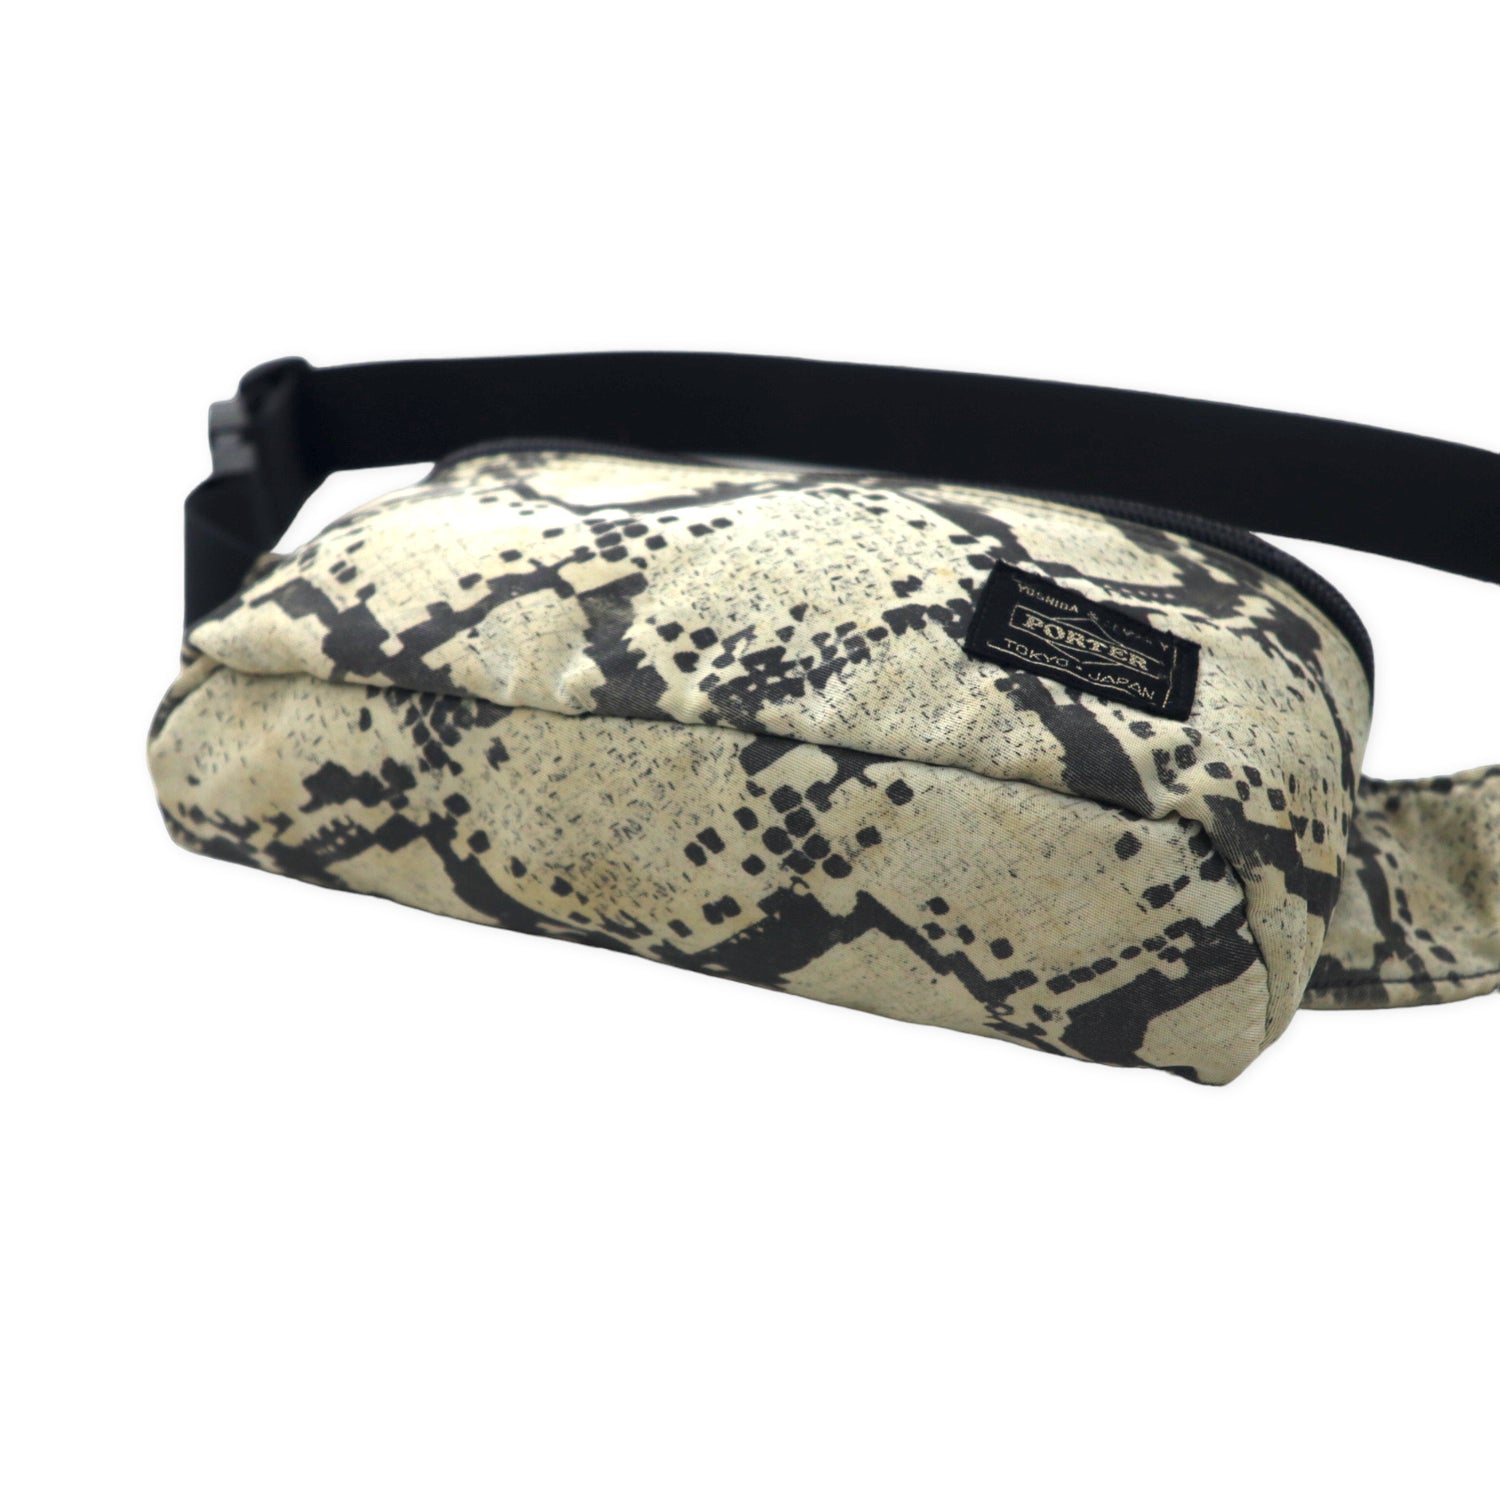 HEAD PORTER Waist Pouch Body Bag Beige Python Pattern Nylon Japan